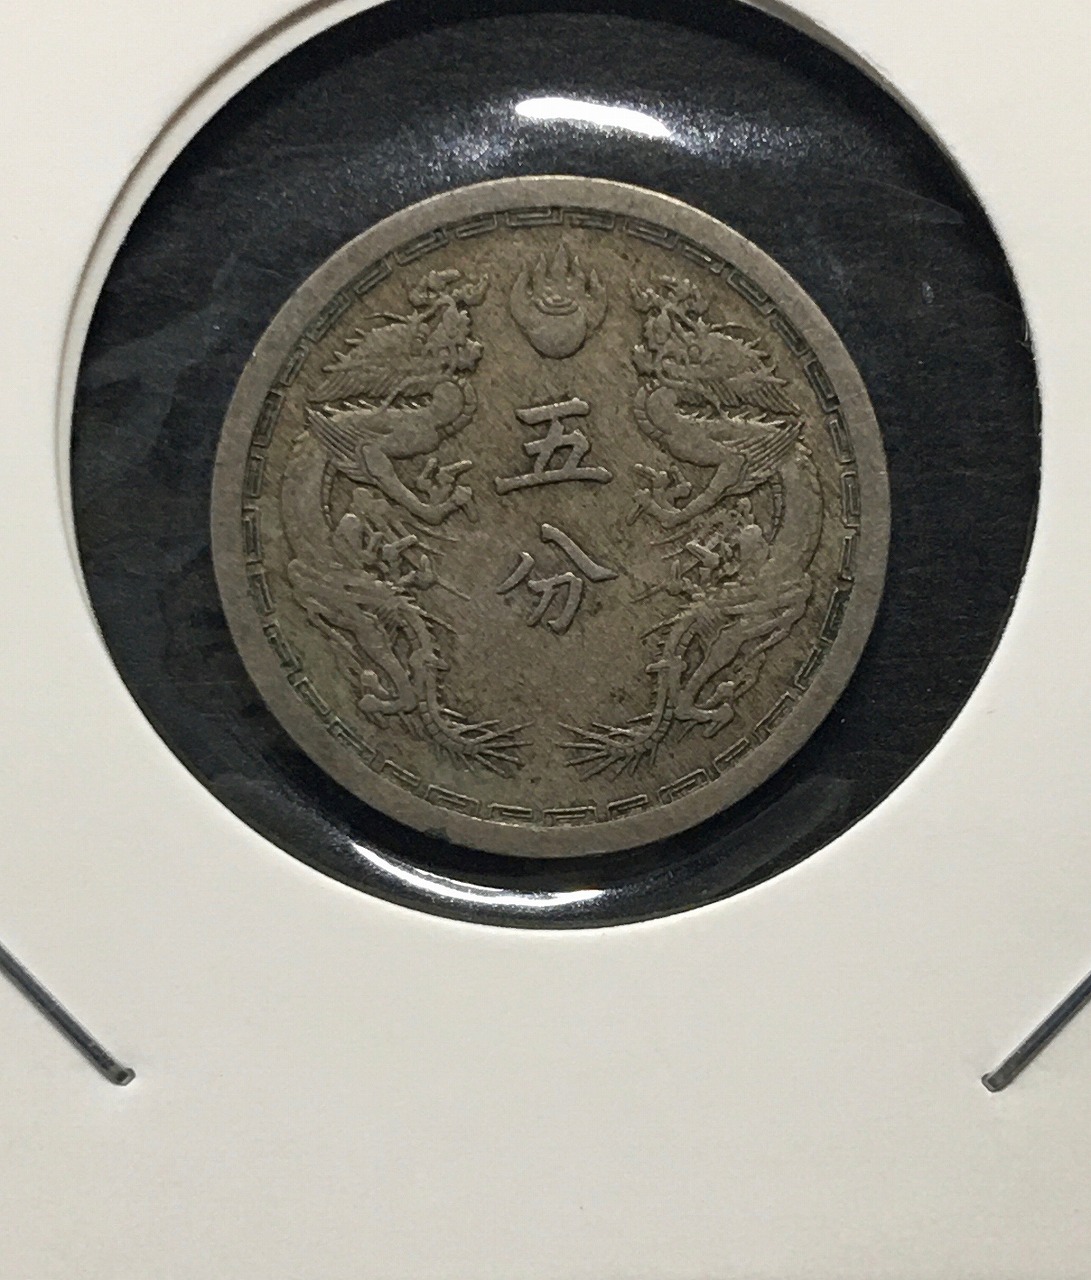 満州 1分 康徳7年 19mm L コイン 硬貨 - 硬貨